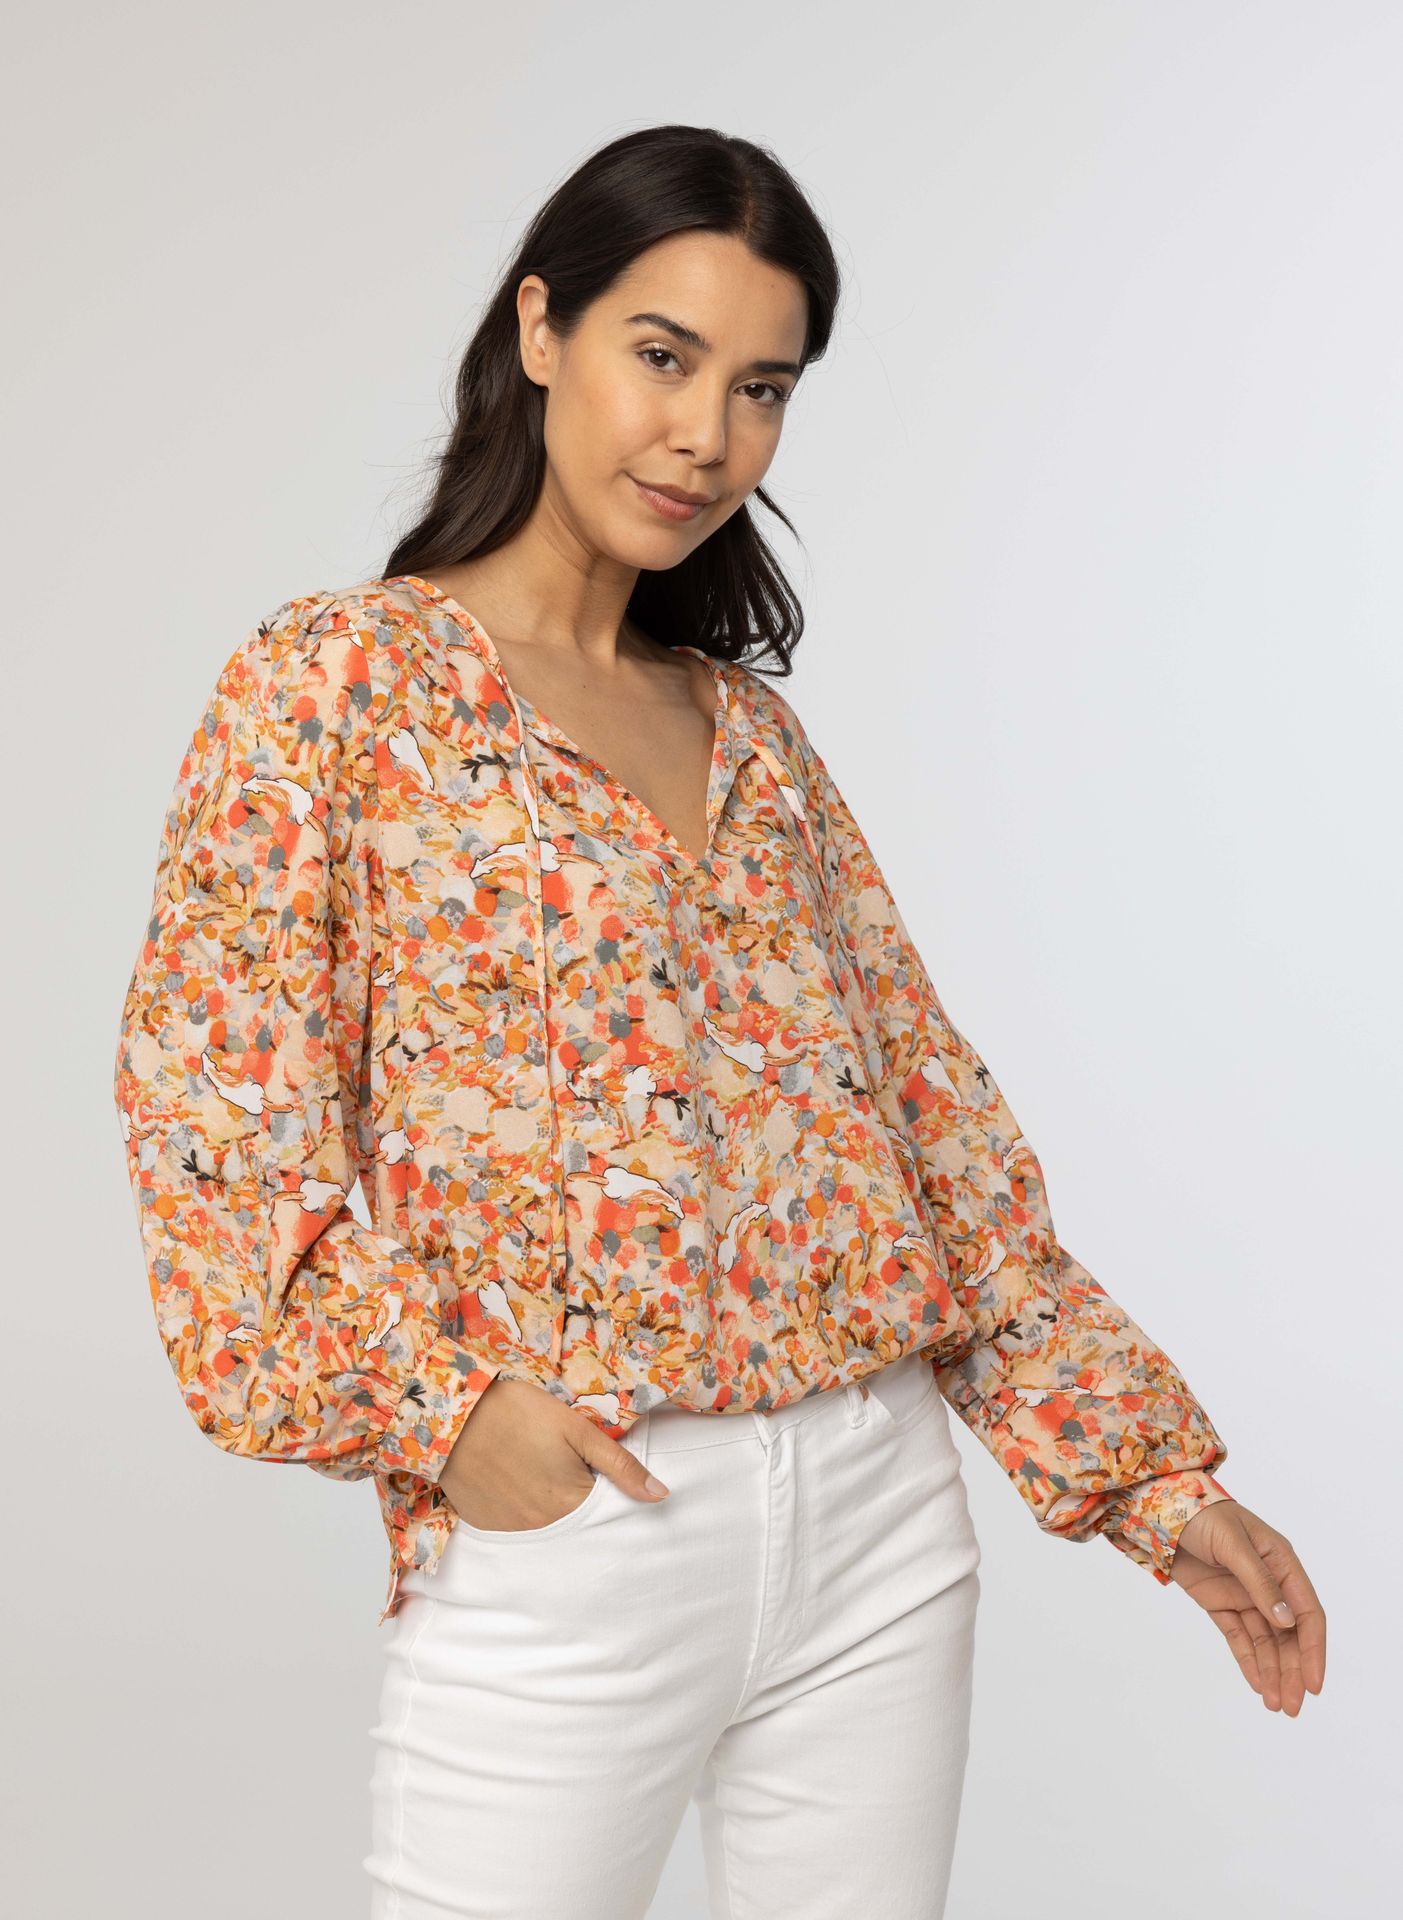  Meerkleurige blouse met koordjes multicolor 214125-002-36